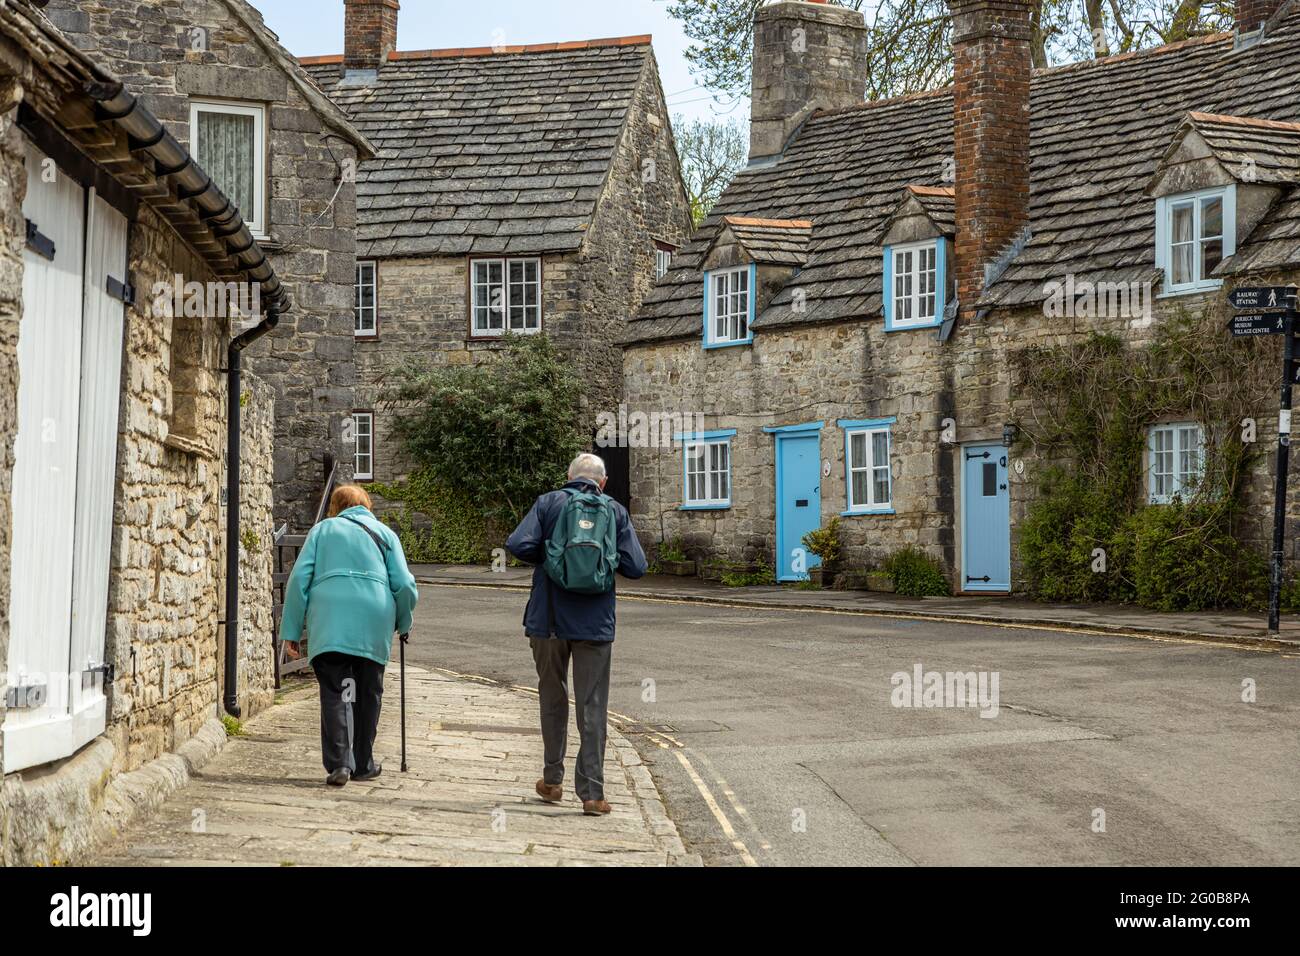 A senior couple walk through the picturesque, idyllic, quaint village of Corfe originally a Saxon stronghold in the Purbeck hills, Dorset England UK Stock Photo